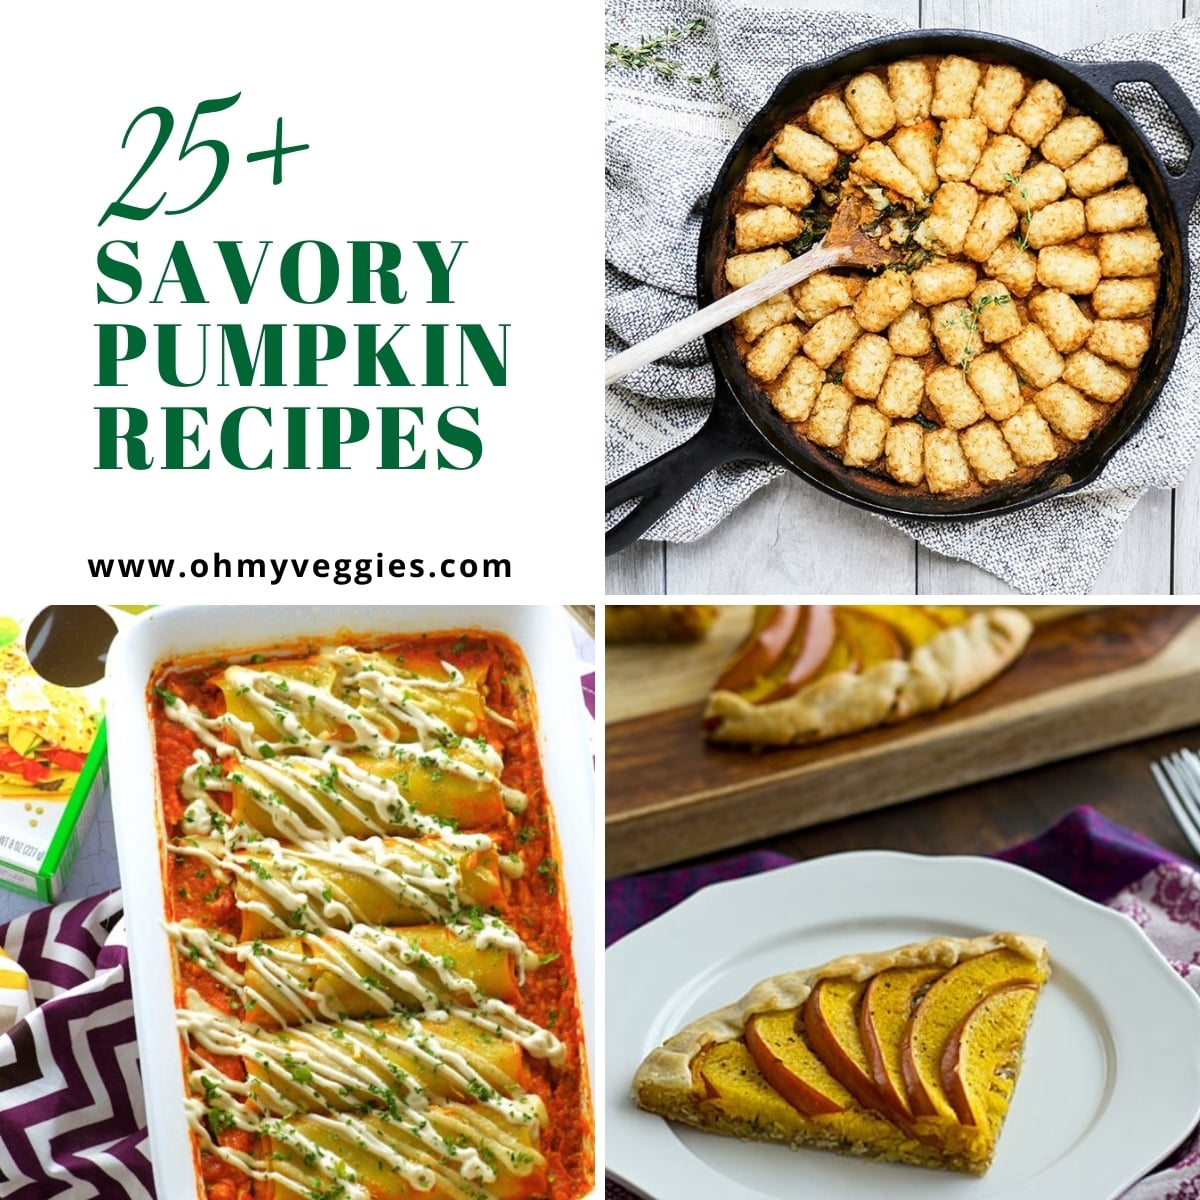 25+ Savory Pumpkin Recipes